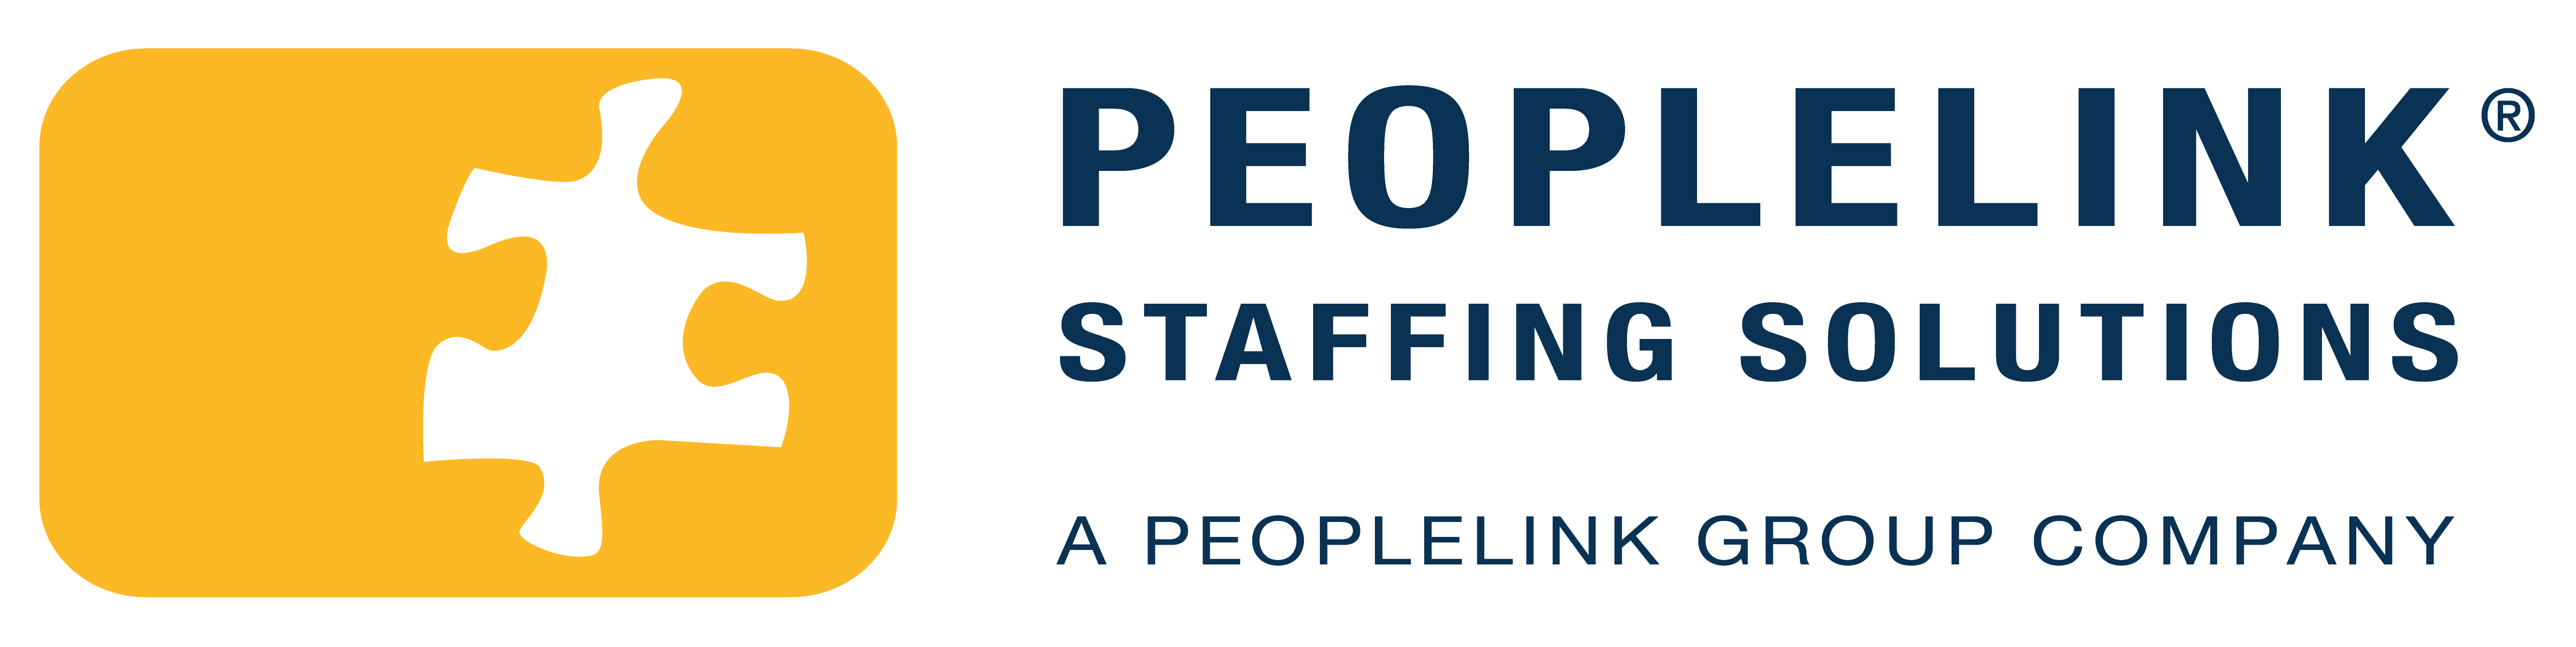 Peoplelink Staffing